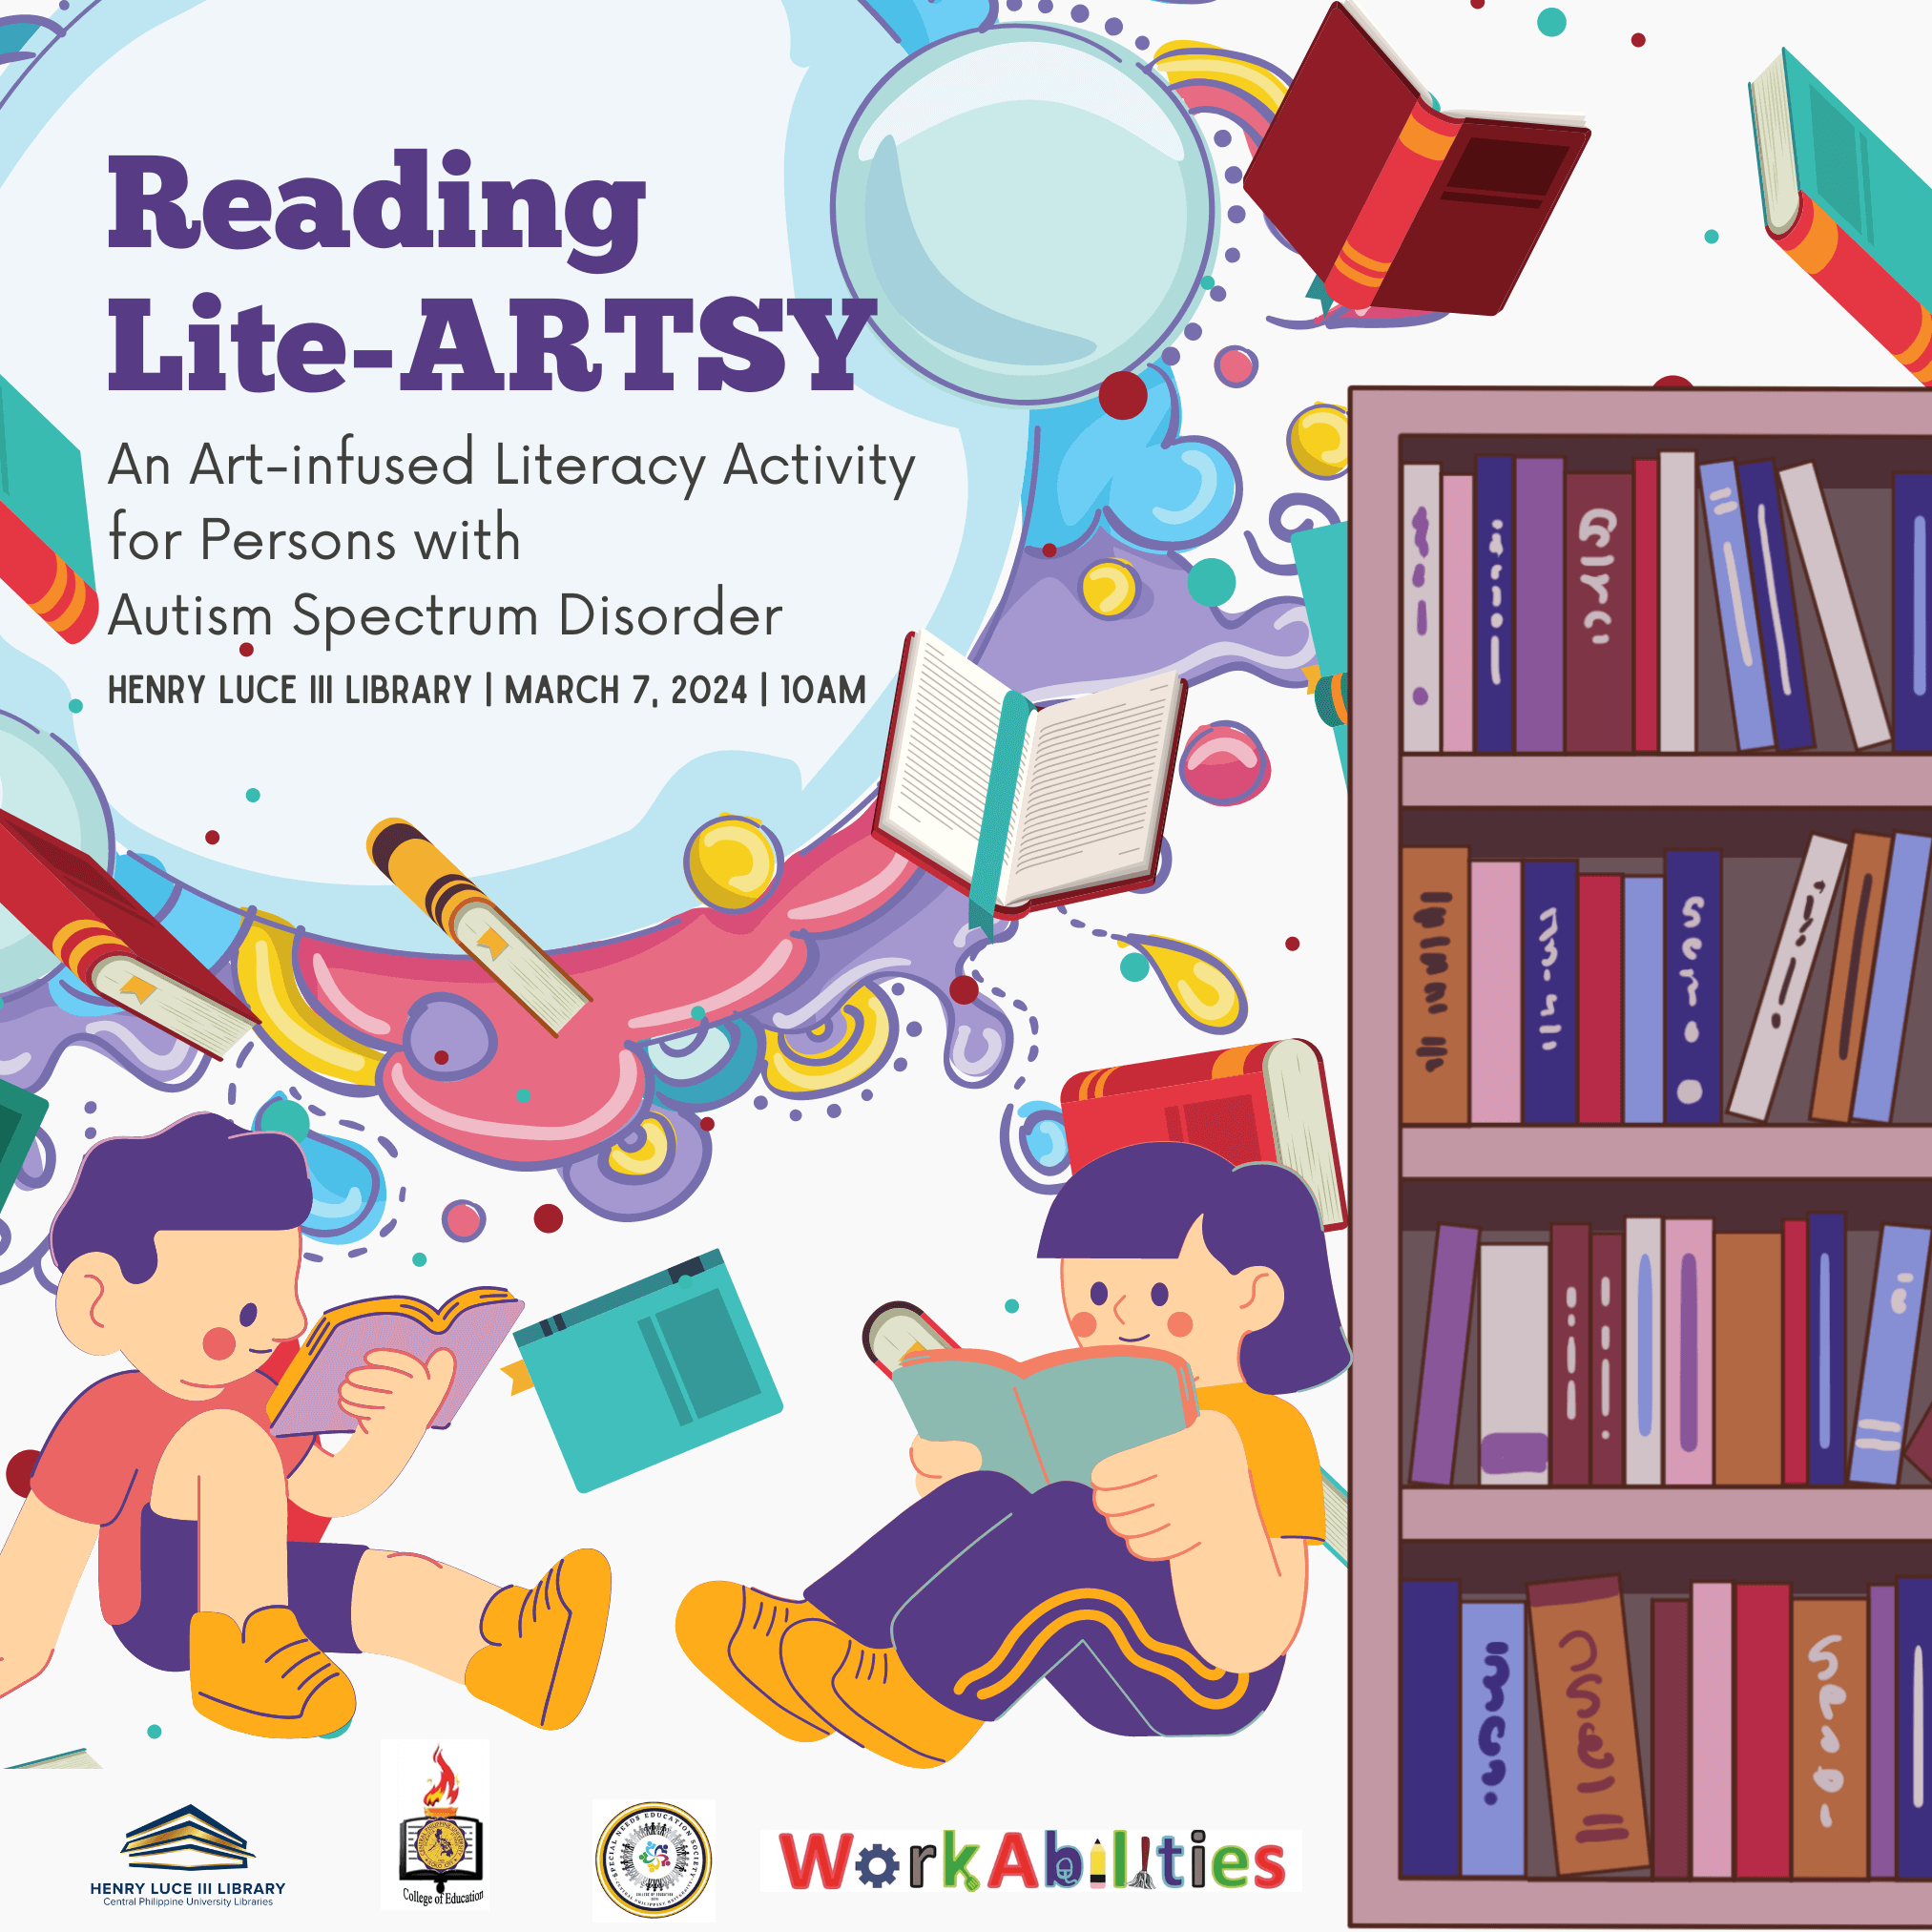 “Reading Lite-Artsy” Event Celebrates Inclusivity and Artistic Exploration